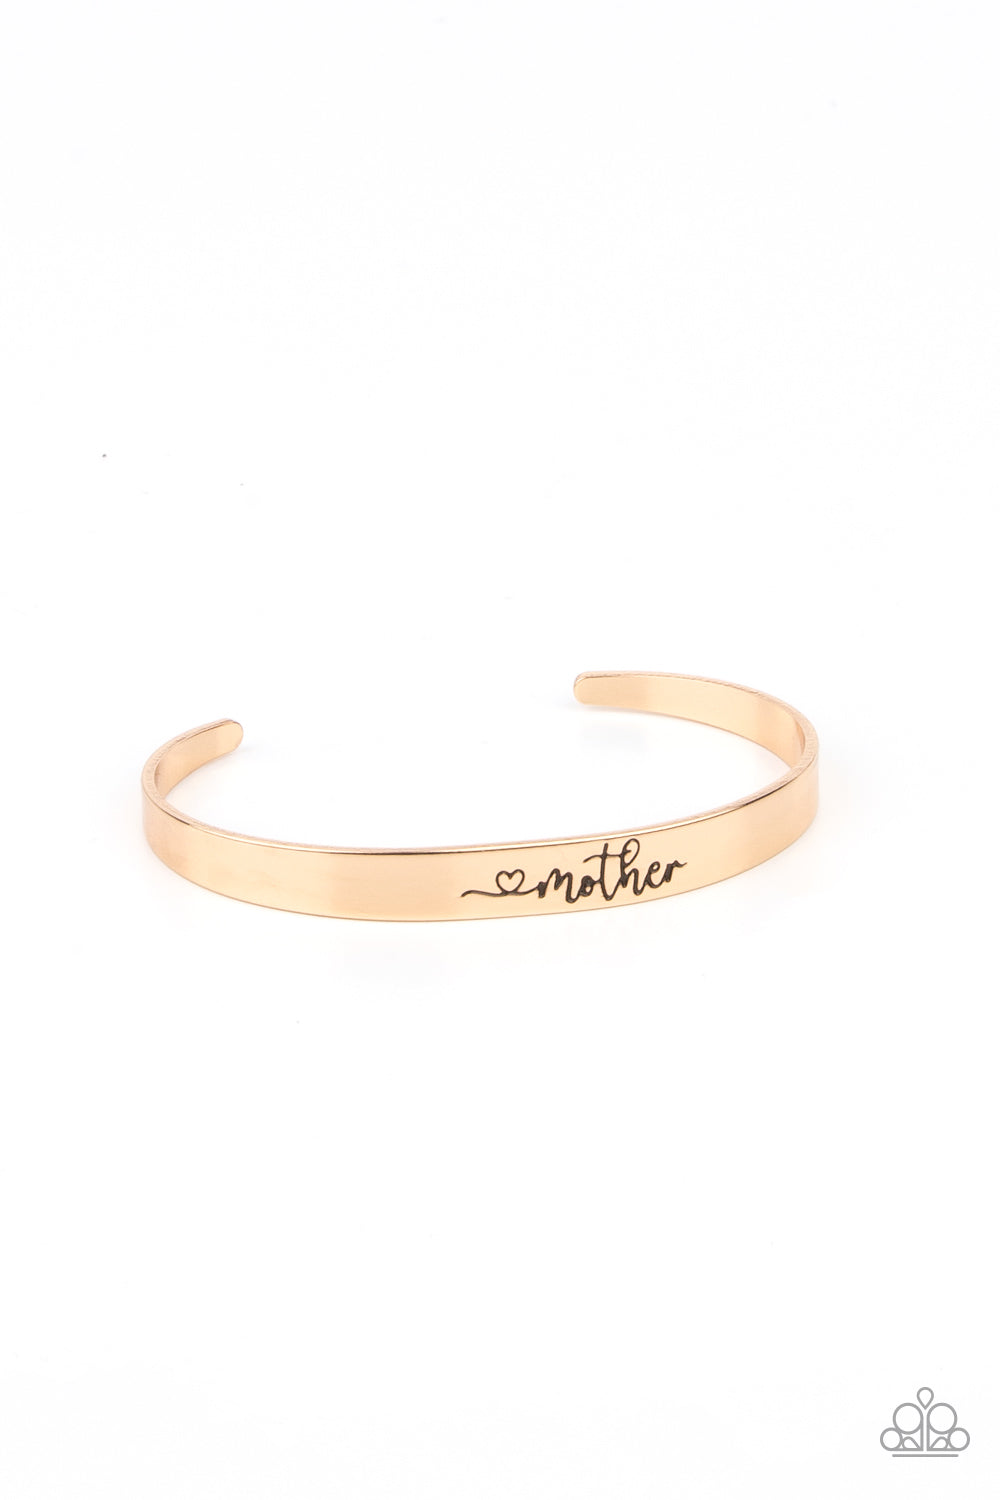 Sweetly Named - Gold Mother Cuff Bracelet - Princess Glam Shop